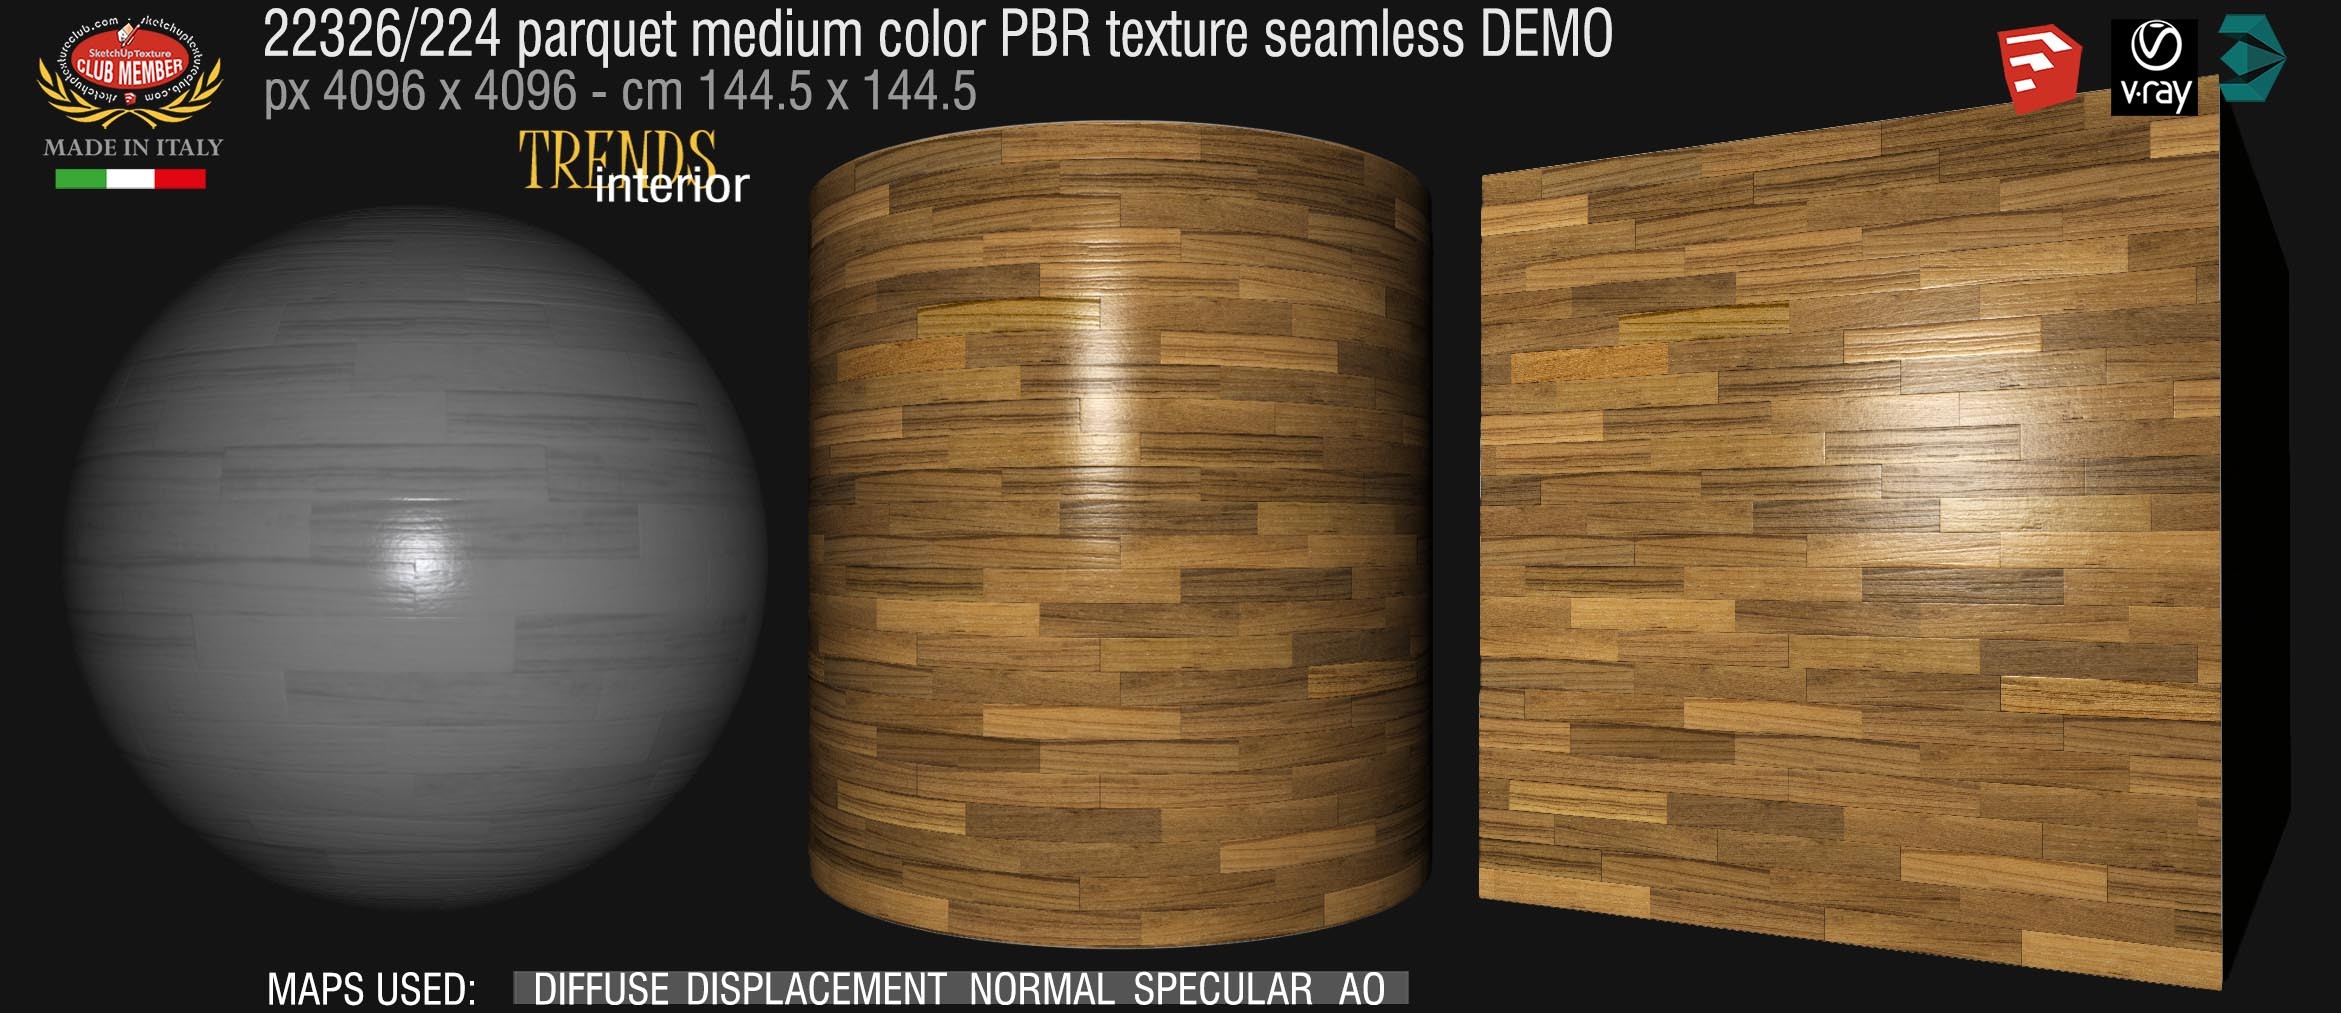 22326_224 parquet medium color PBR texture seamless DEMO